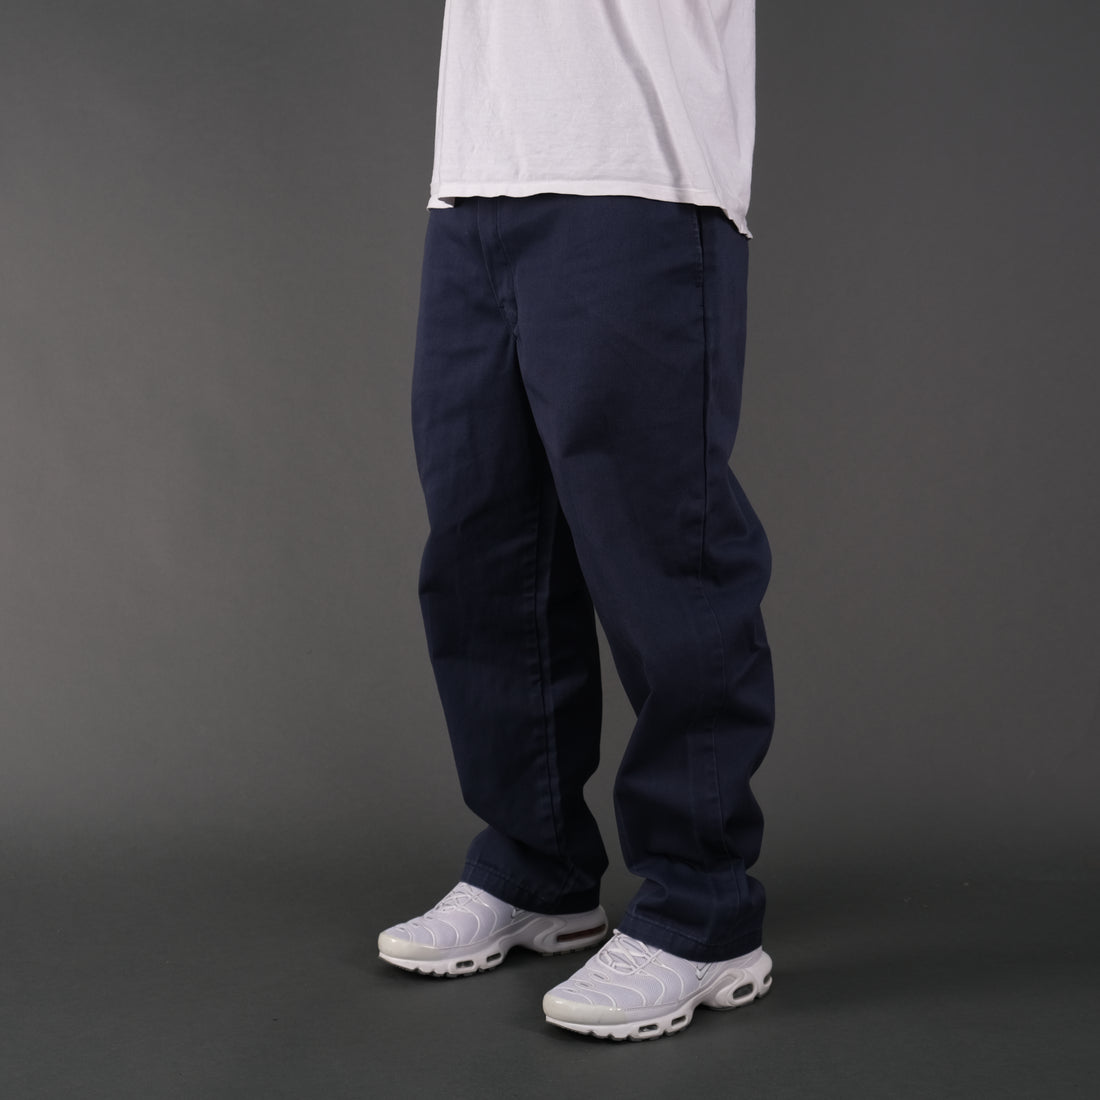 Vintage Dickies 874 chino trousers in navy blue.